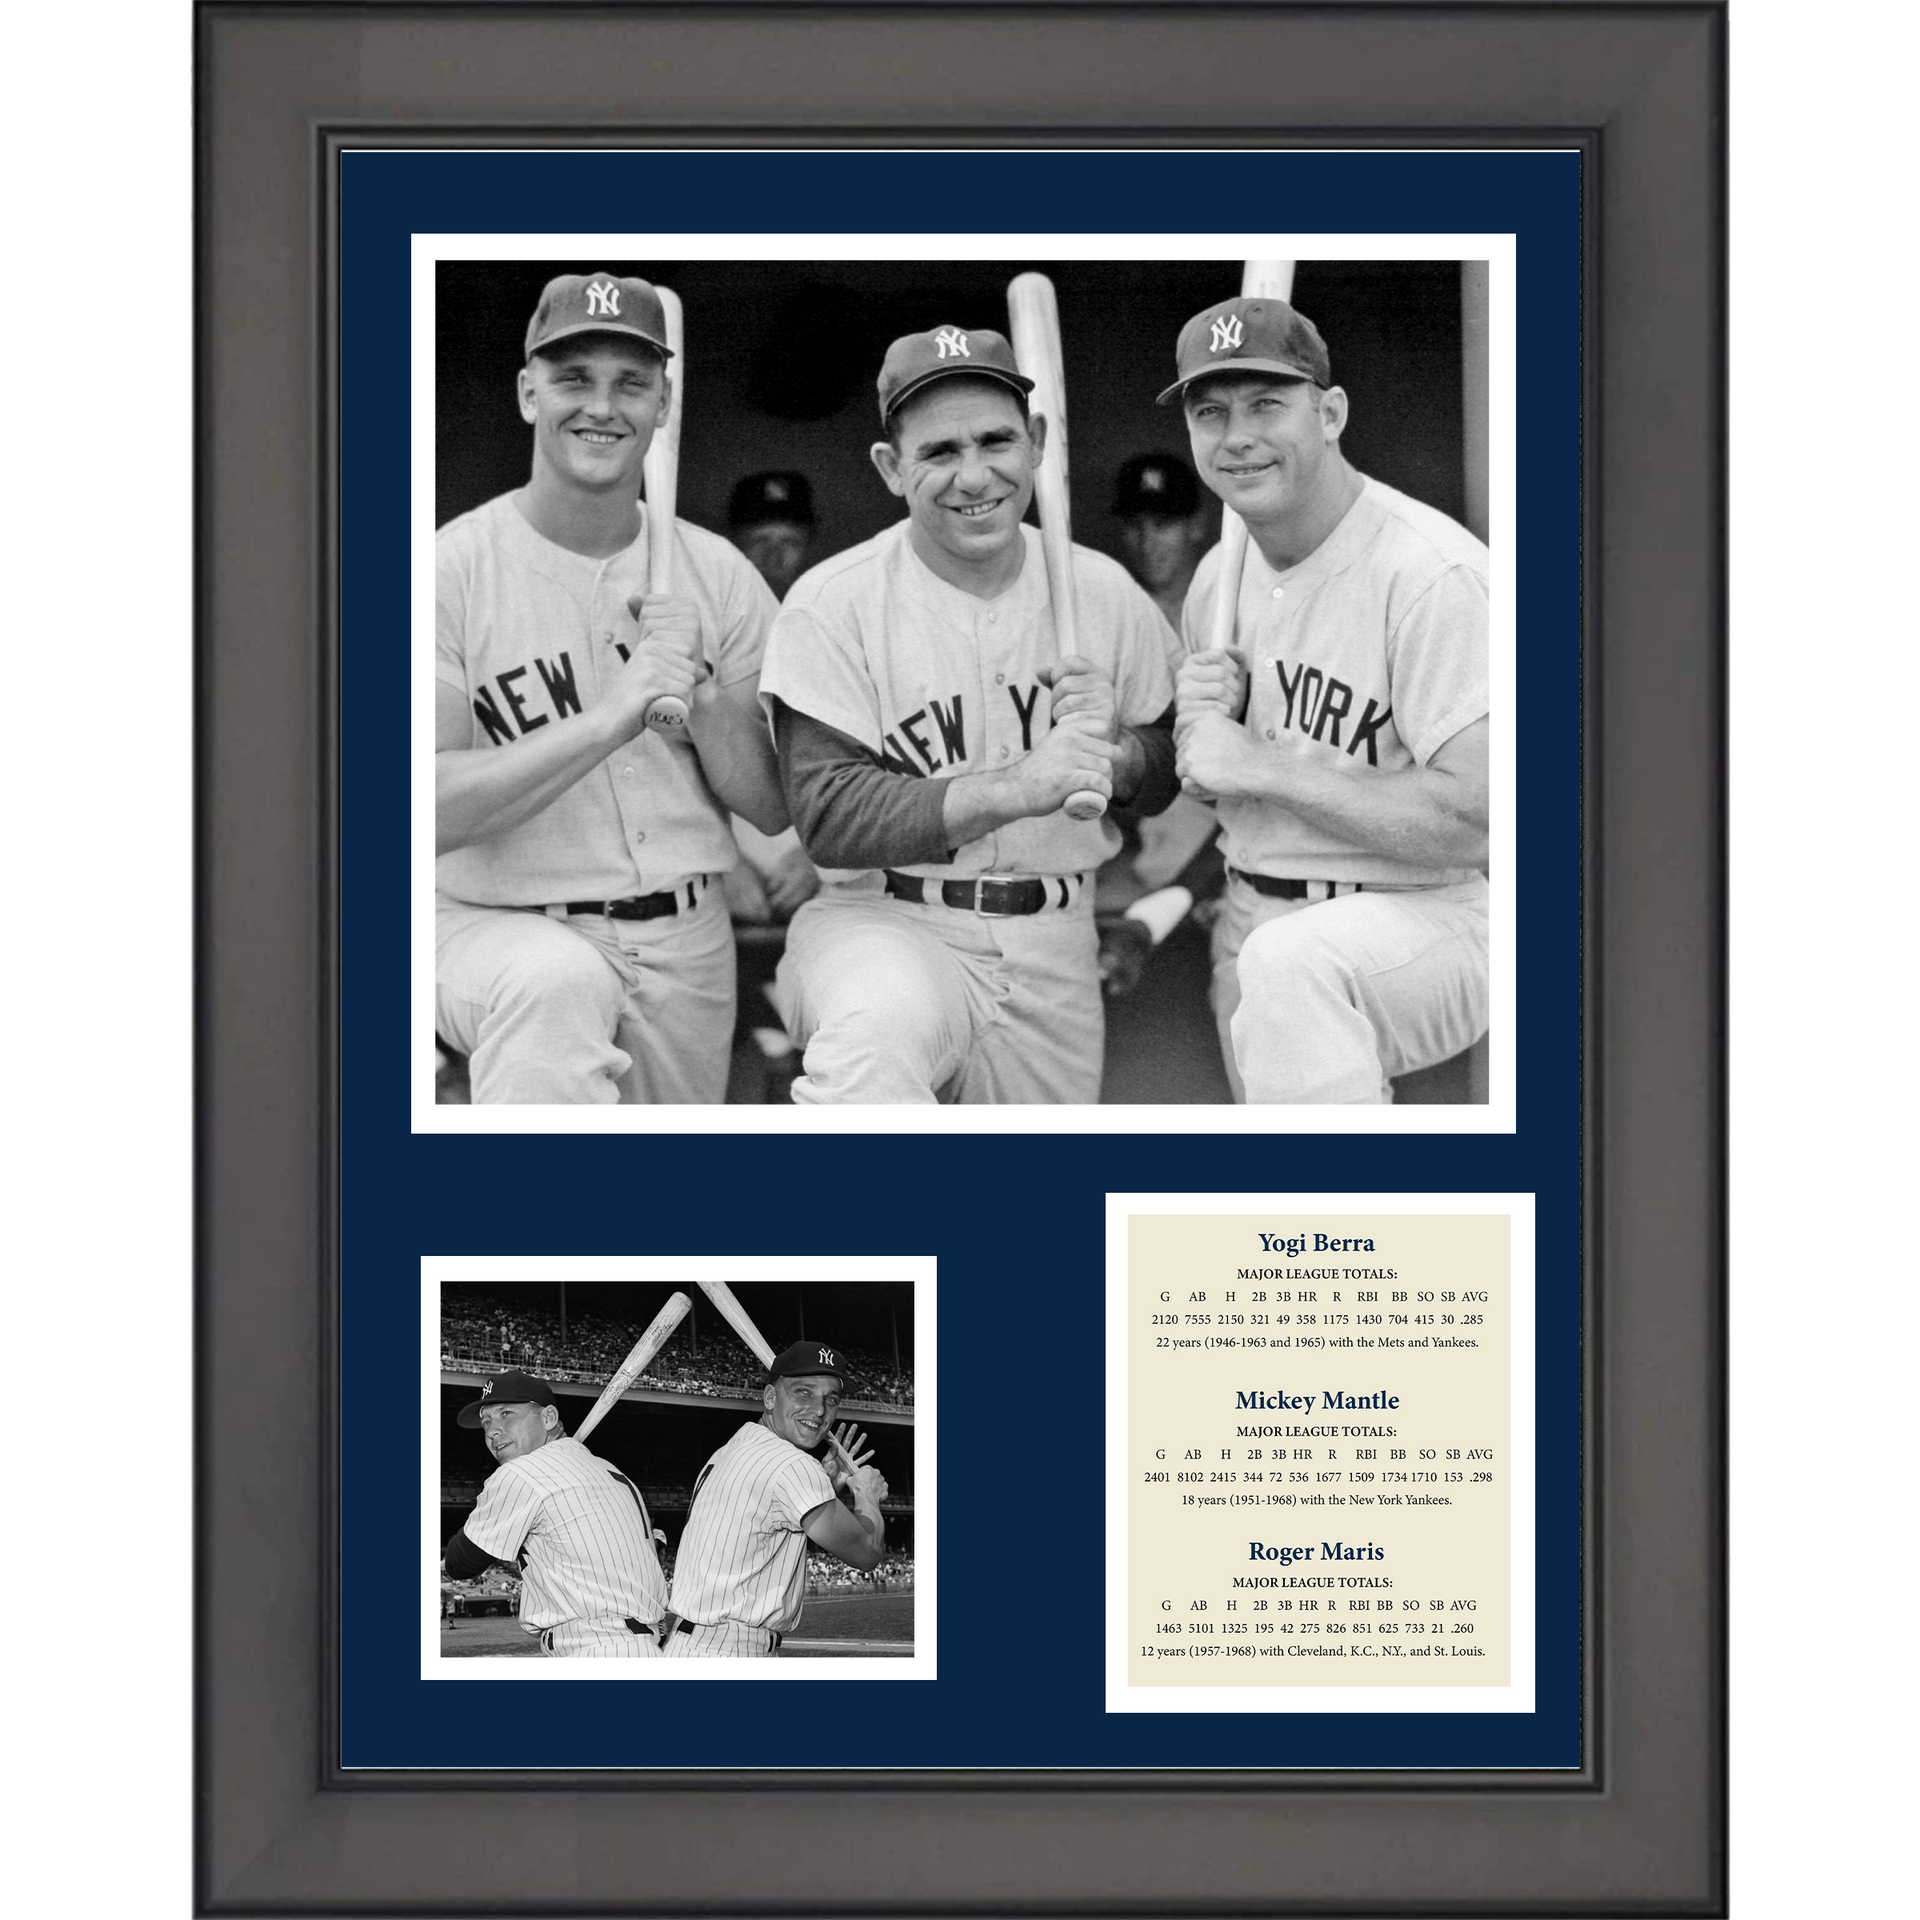 Roger Maris Yogi Berra and Mickey Mantle Sports Photo - 8 x 10